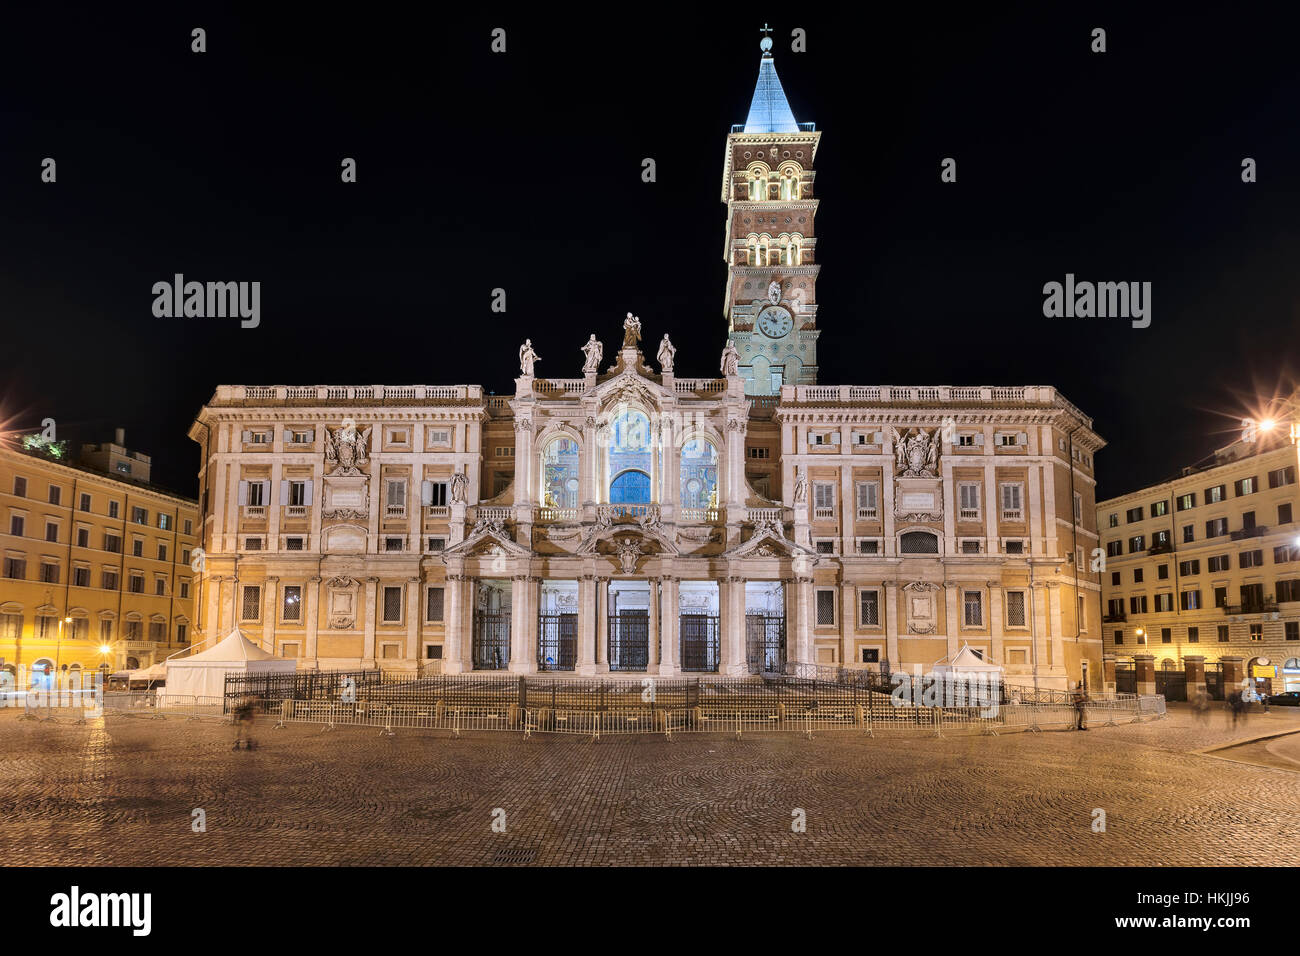 Facade of Santa Maria Maggiore Church, Rome, Italy Stock Photo